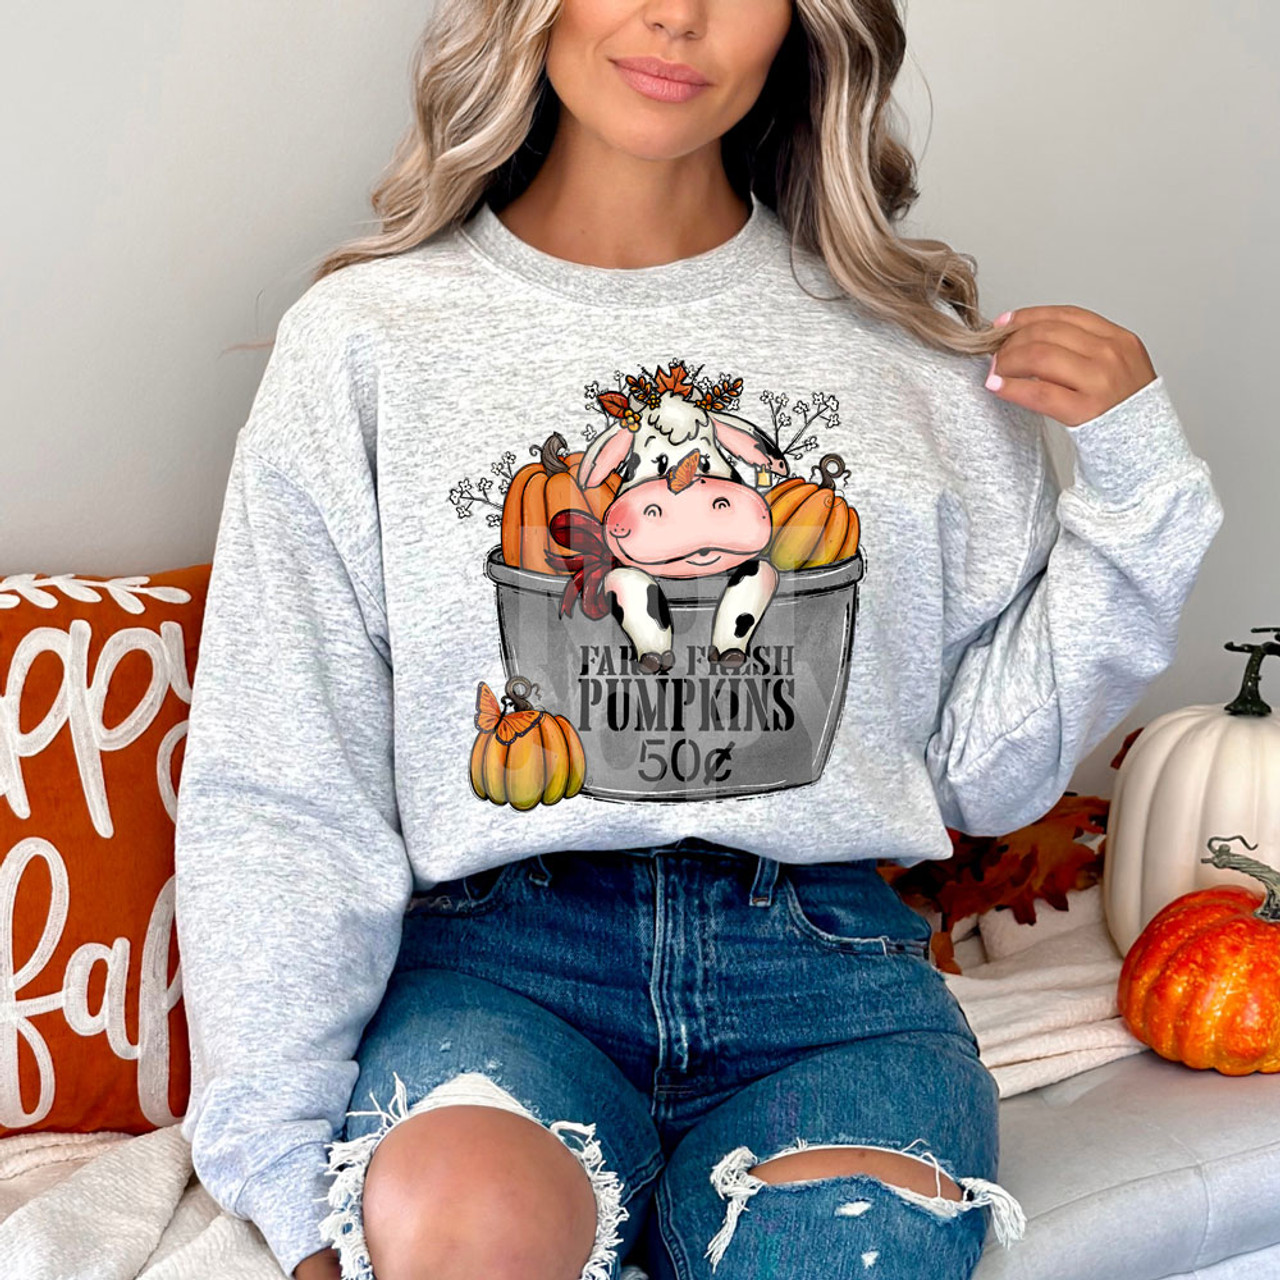 Farm Fresh Pumpkins Sublimation Sweatshirt With Pumpkins on 